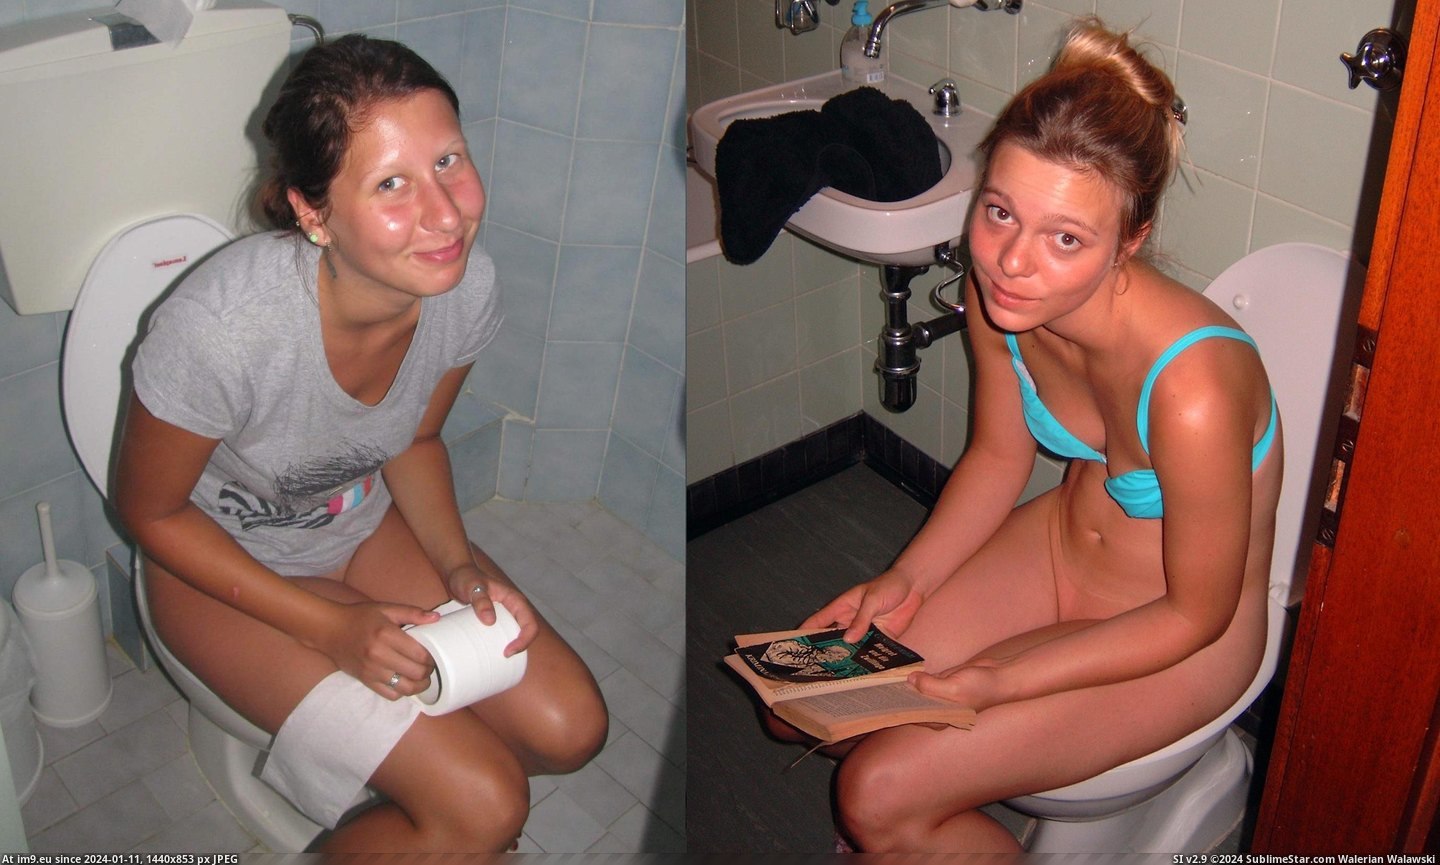 #Hot #Young #Babe #Pose #Alike #Embarassed #Pissing #Bitch #Bath Pose-alike (6) Pic. (Bild von album lookalike teens))